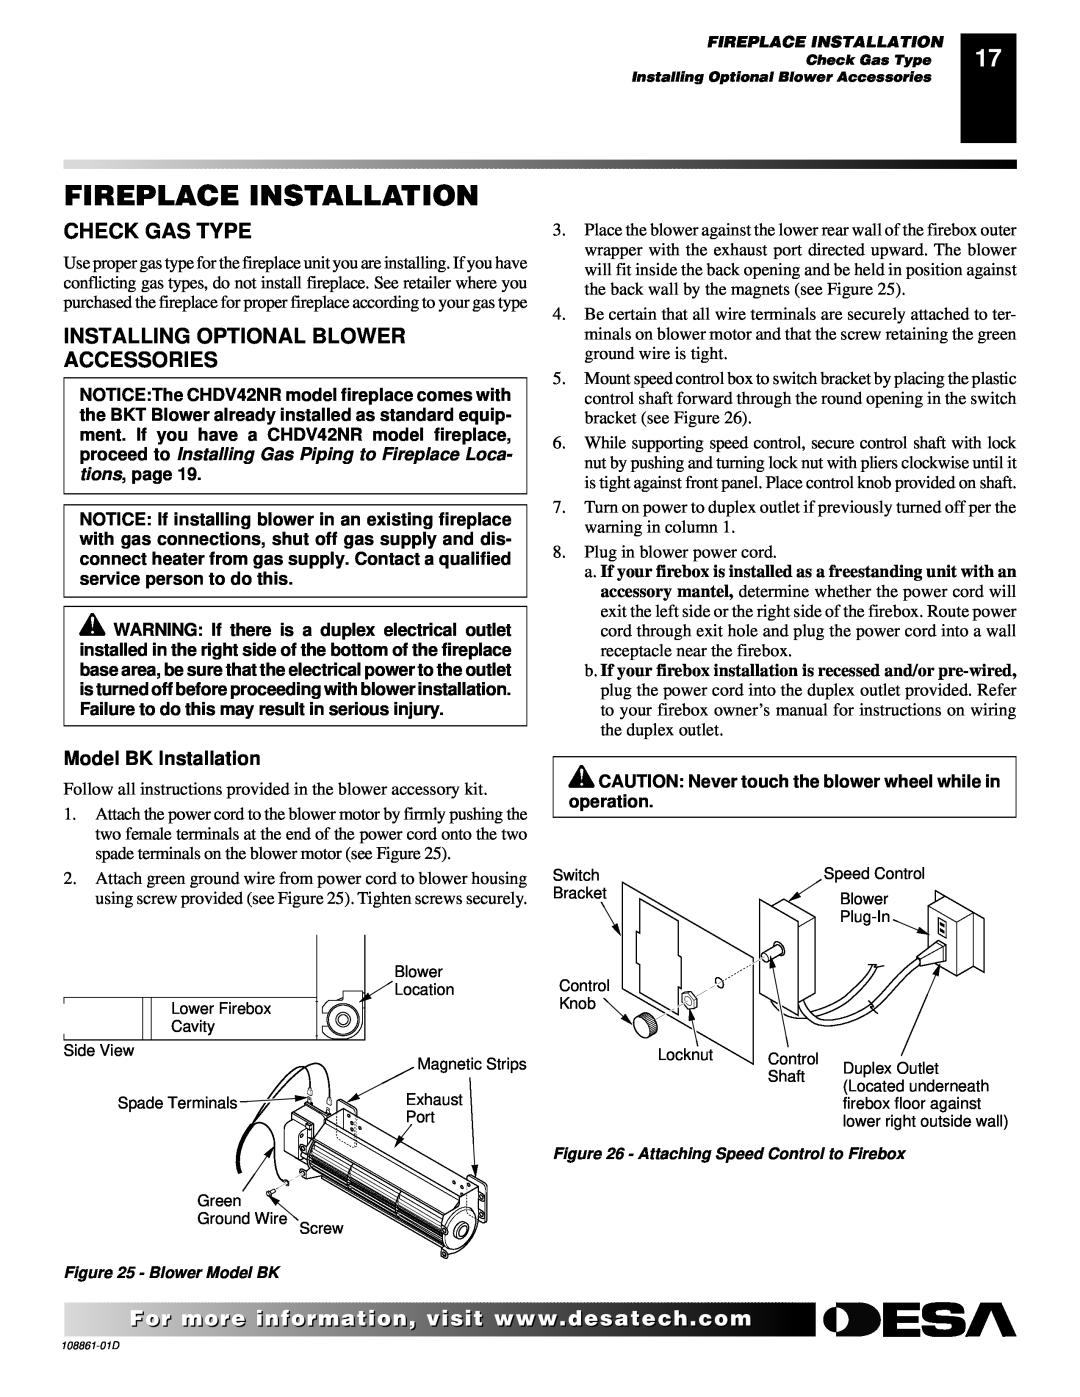 Desa (V)V36P Fireplace Installation, Check Gas Type, Installing Optional Blower Accessories, Model BK Installation 